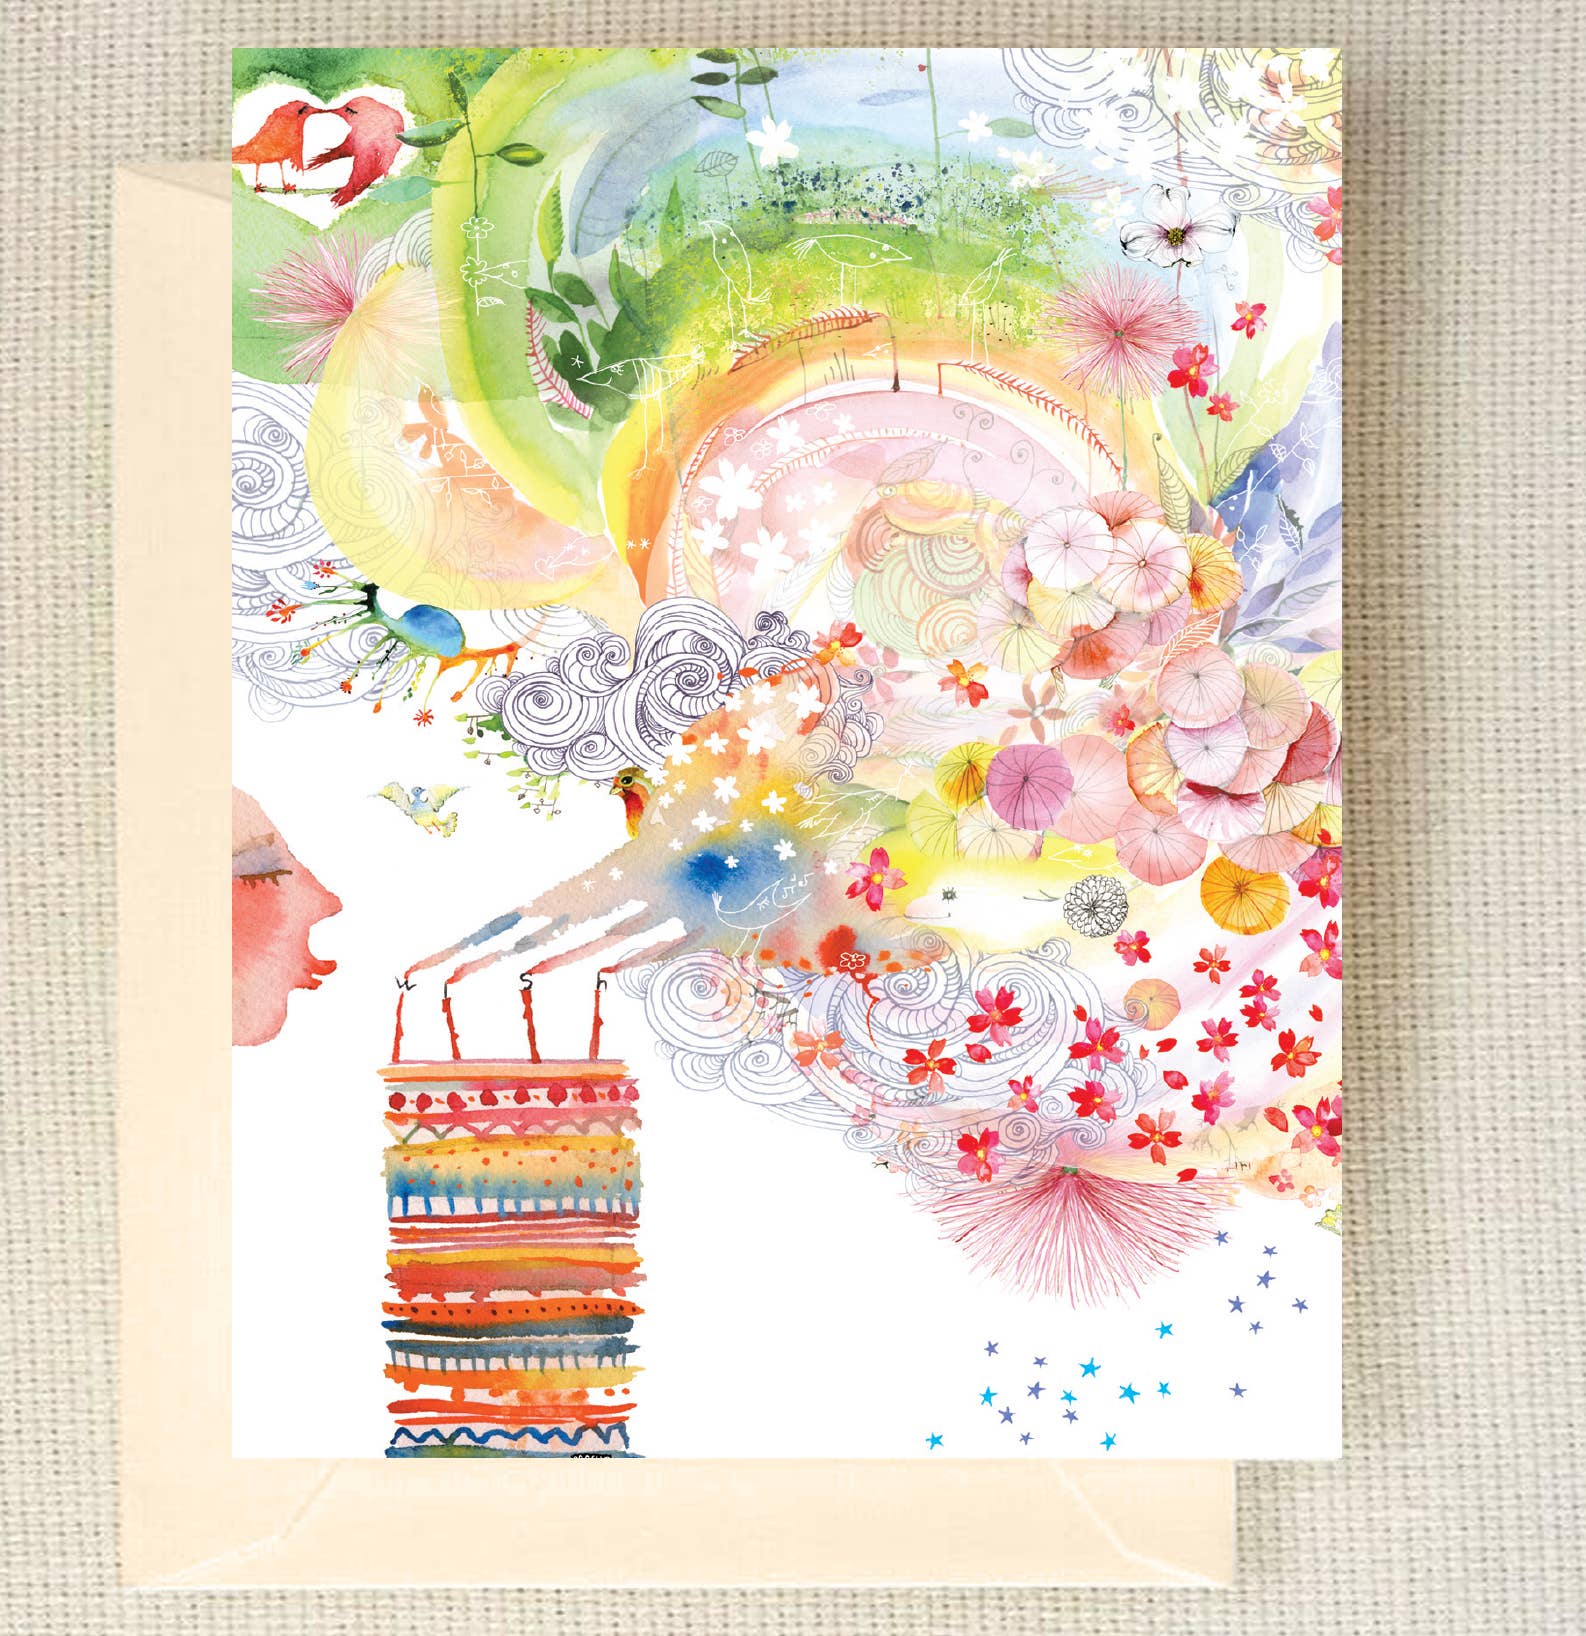 Wish Plume watercolor greeting card